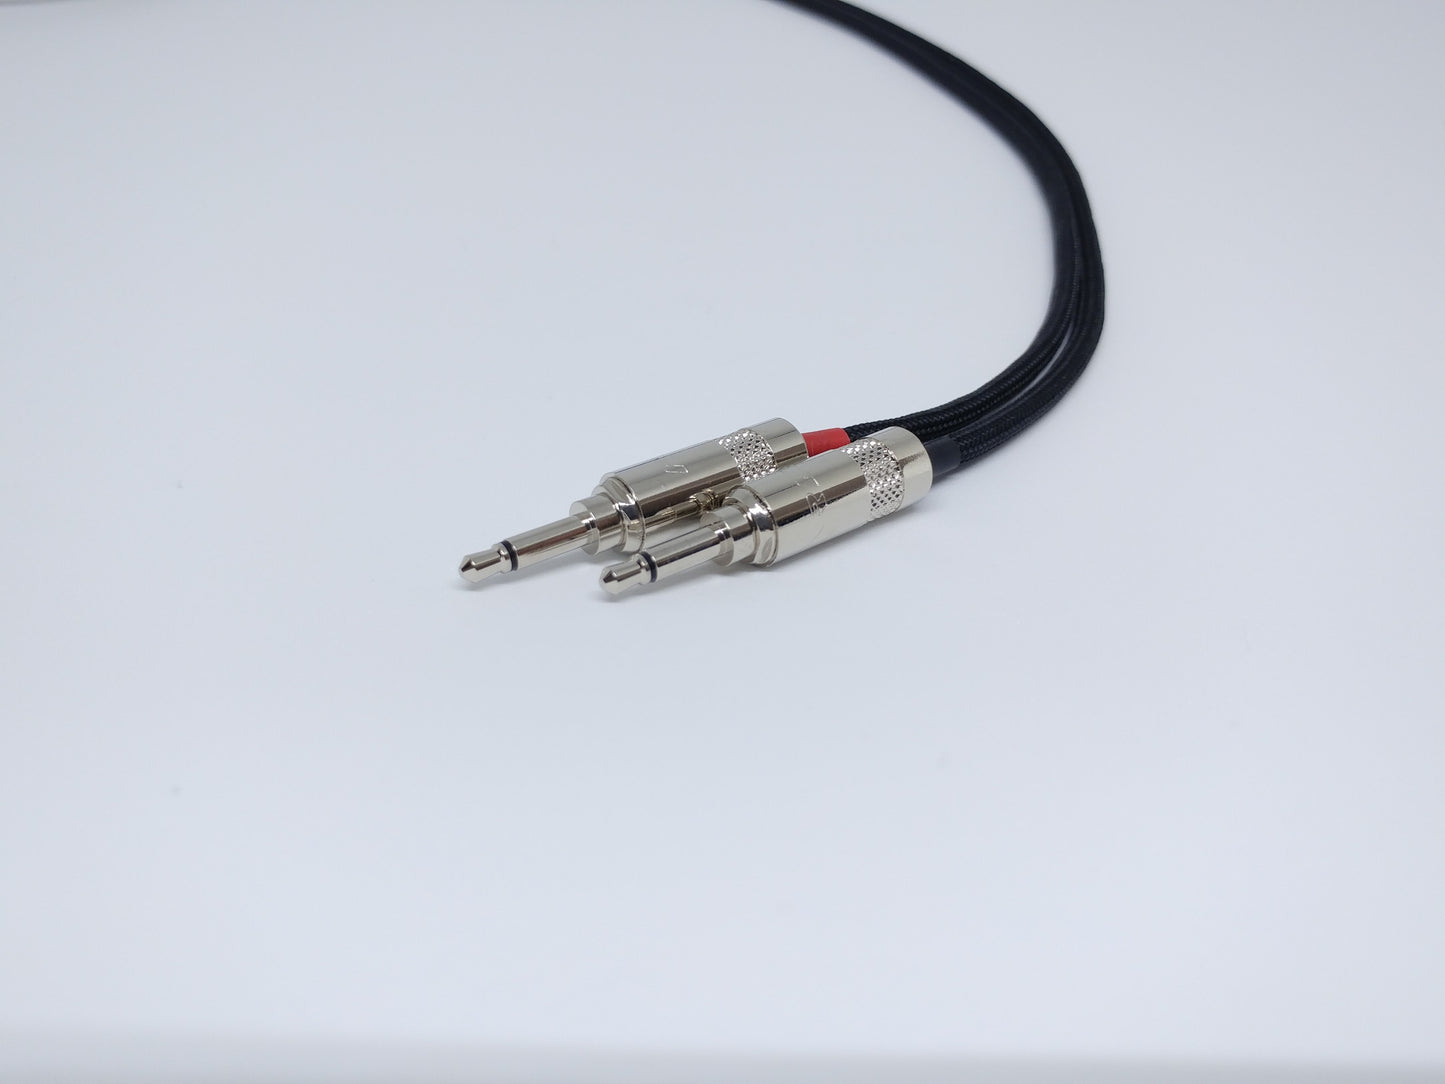 Dual 3.5mm headphone cable connectors